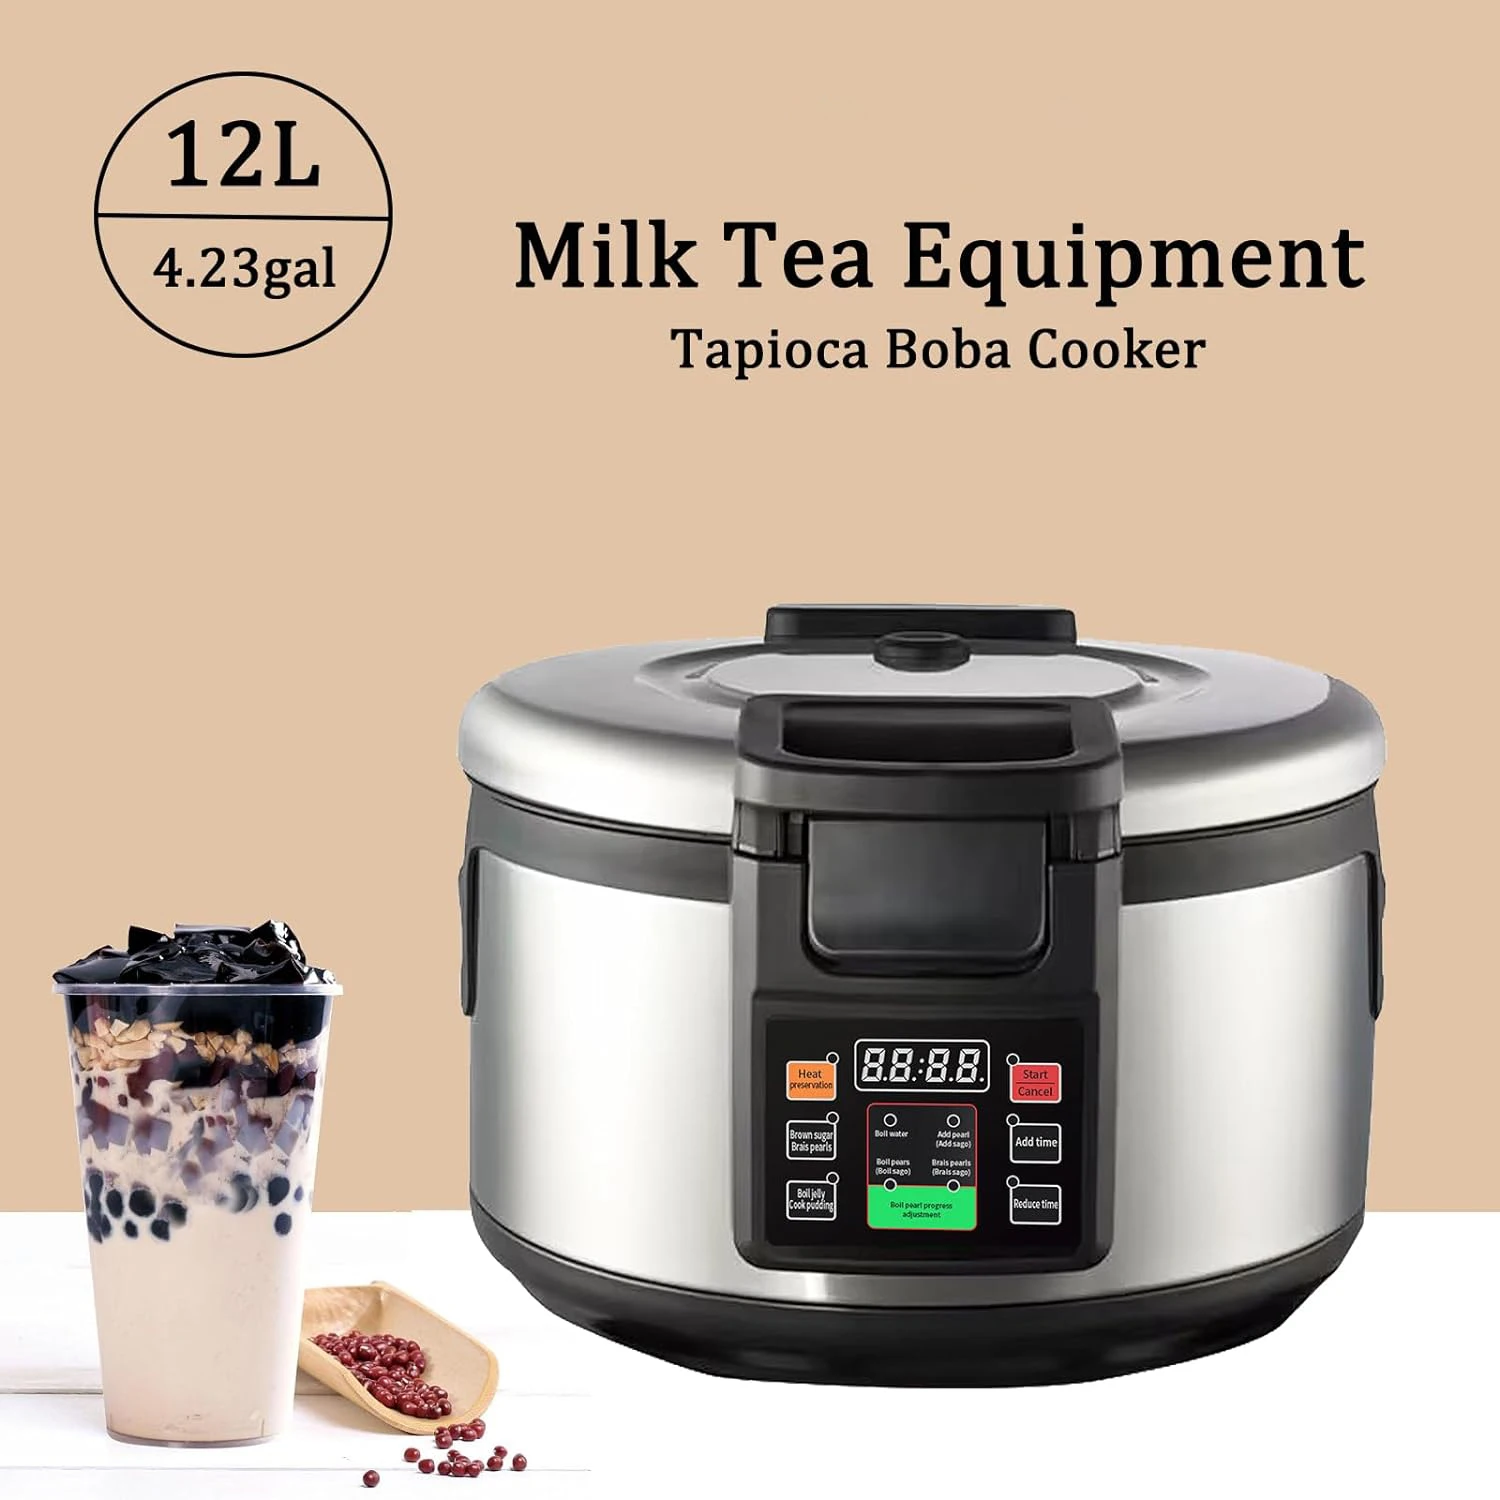 Mvckyi 16L 4.2Gal Automatic Commercial Tapioca Boba Cooker For Milk Tea Shop Large Capacity Non-Stick Boba Pearl Rice Pot Cooker